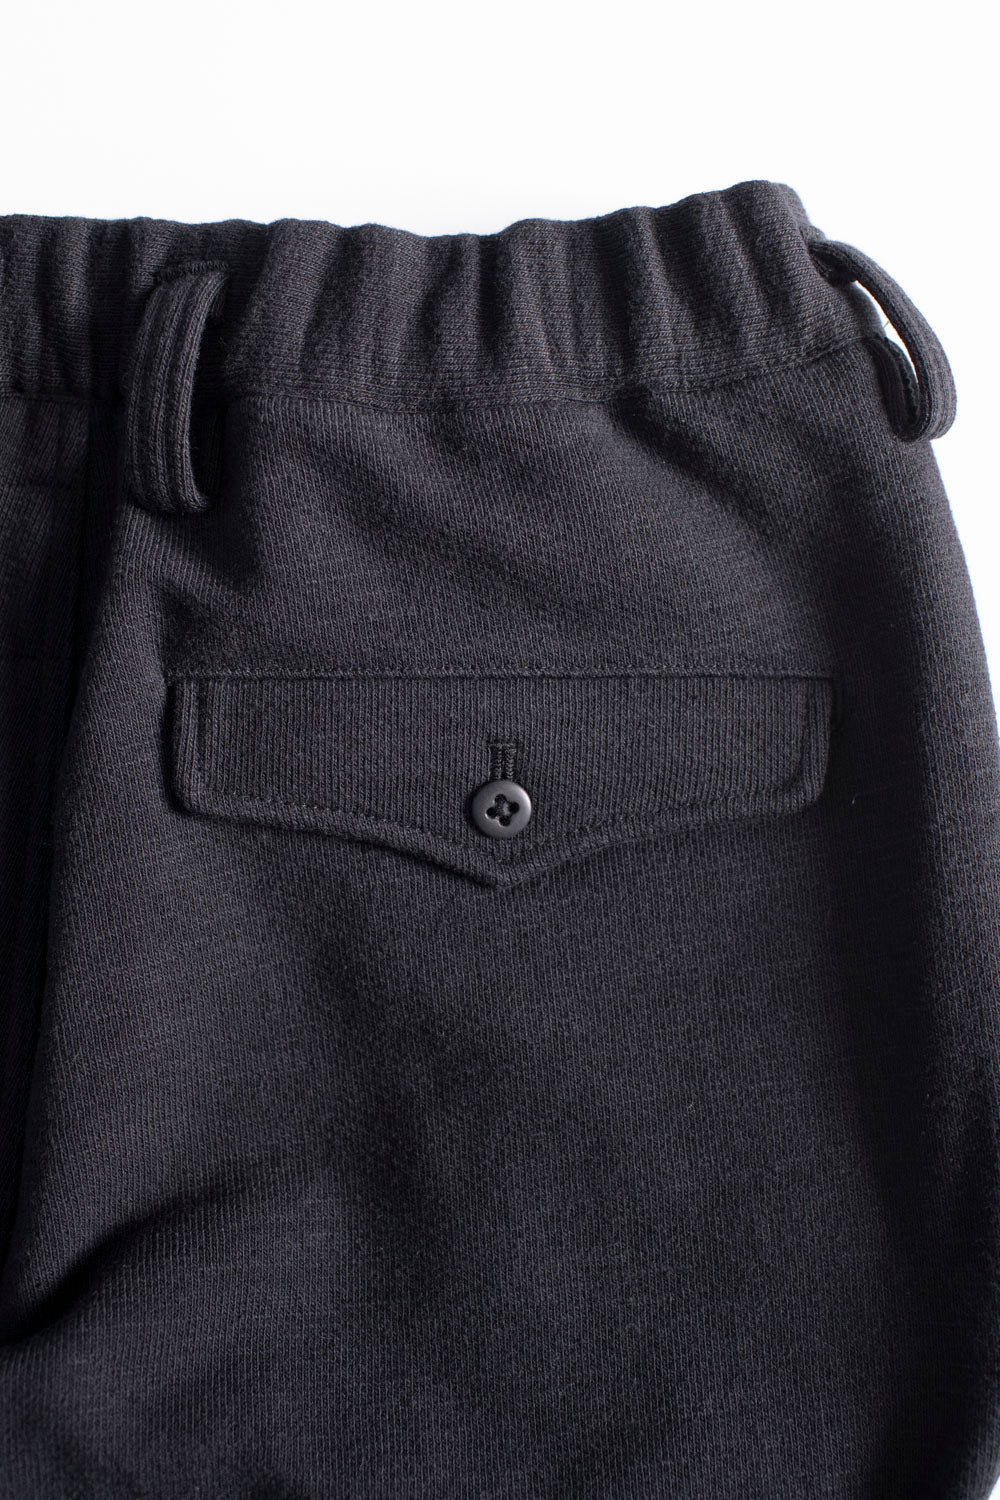 GG Sweat Trousers - 07 Black